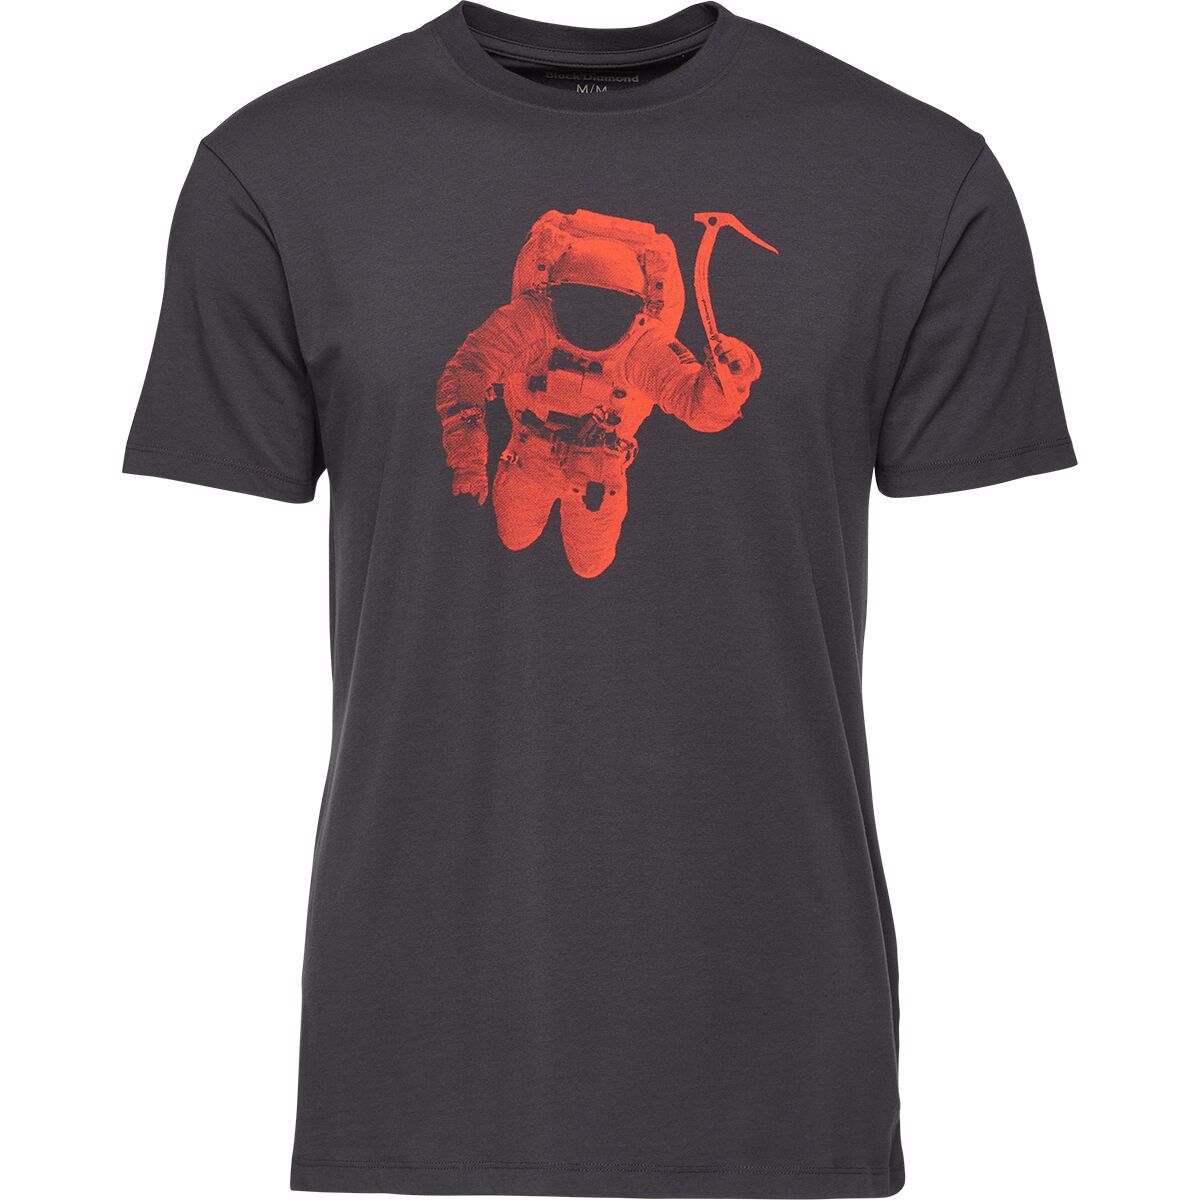 Spaceshot Short-Sleeve T-Shirt - Men